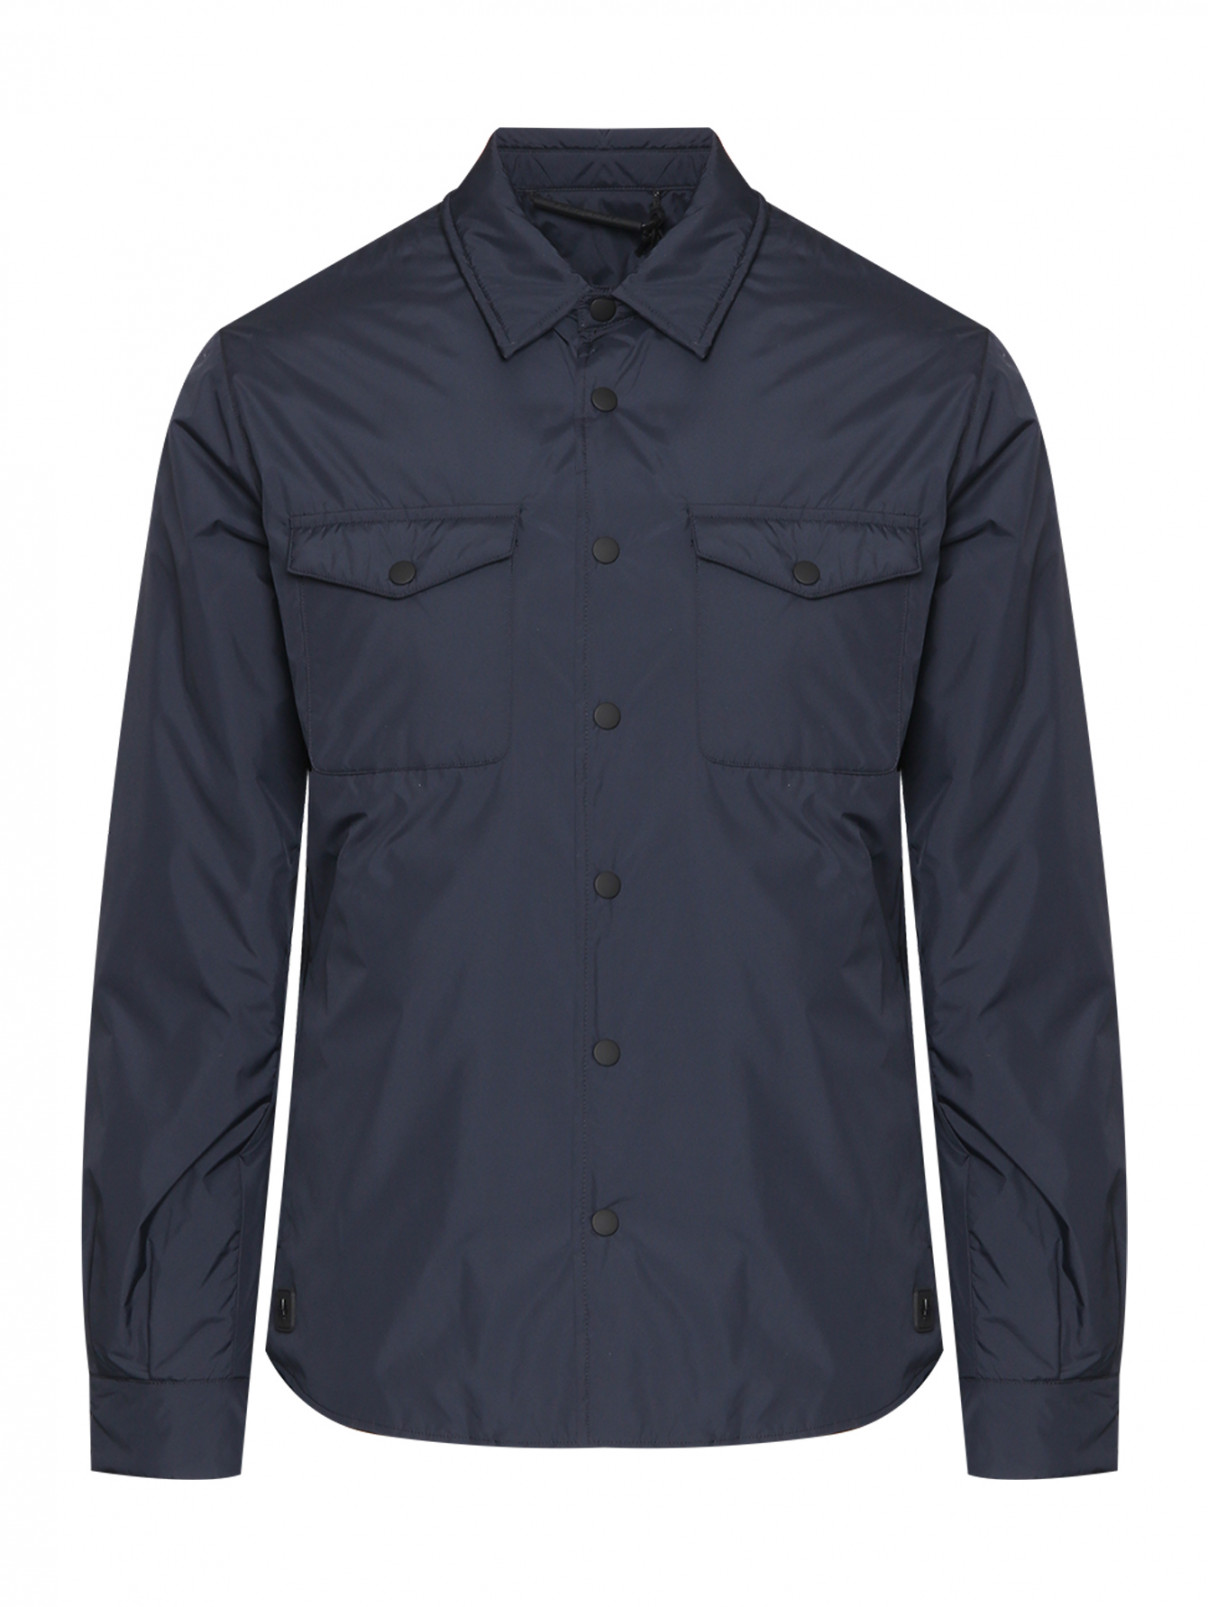 Куртка на кнопках с карманами Fradi  –  Общий вид  – Цвет:  Синий